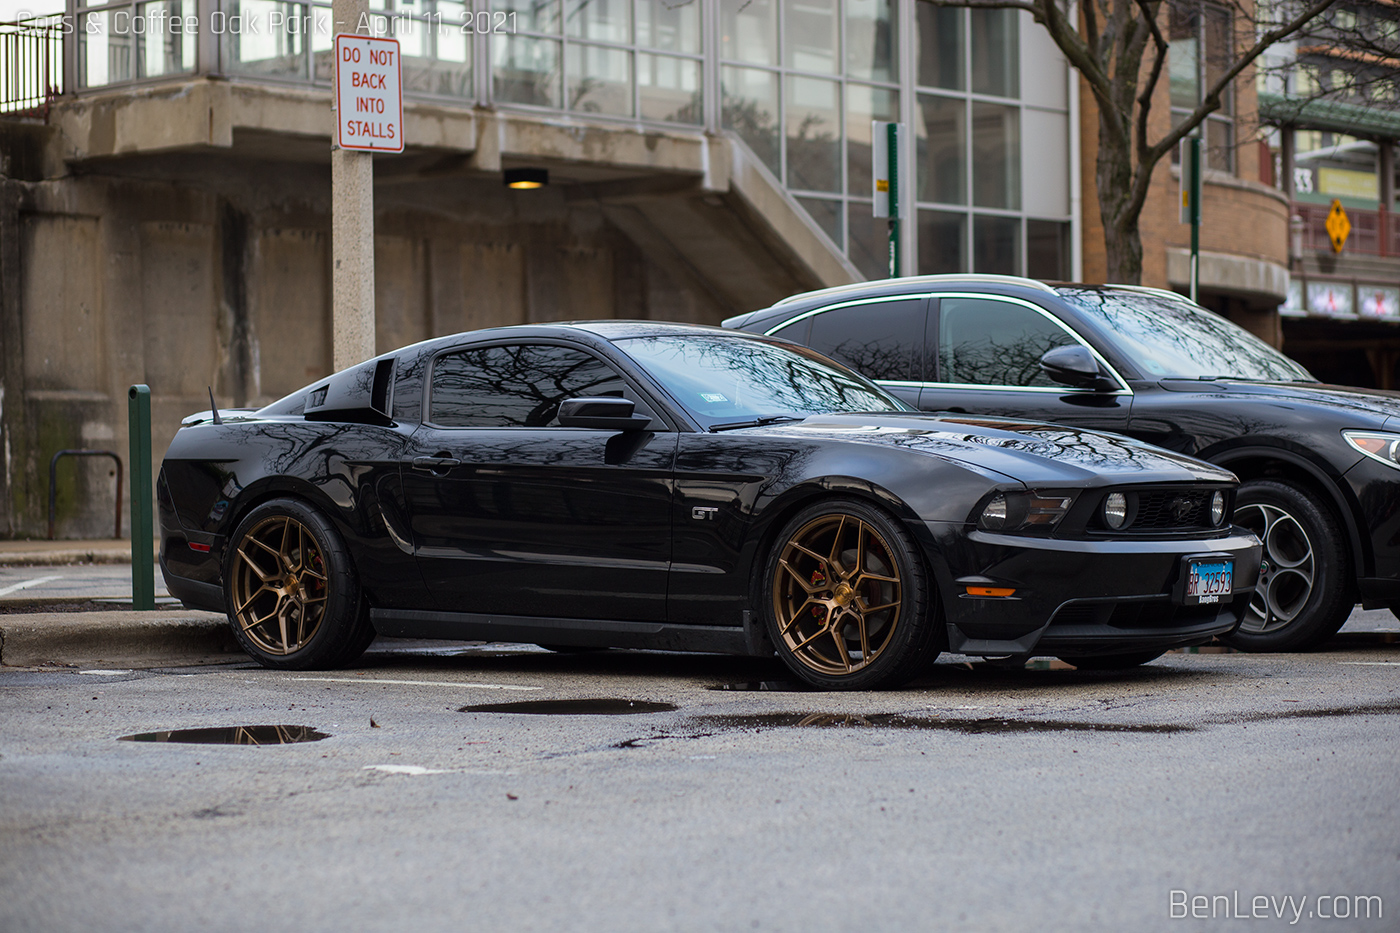 Black S197 Mustang GT on bronze wheels